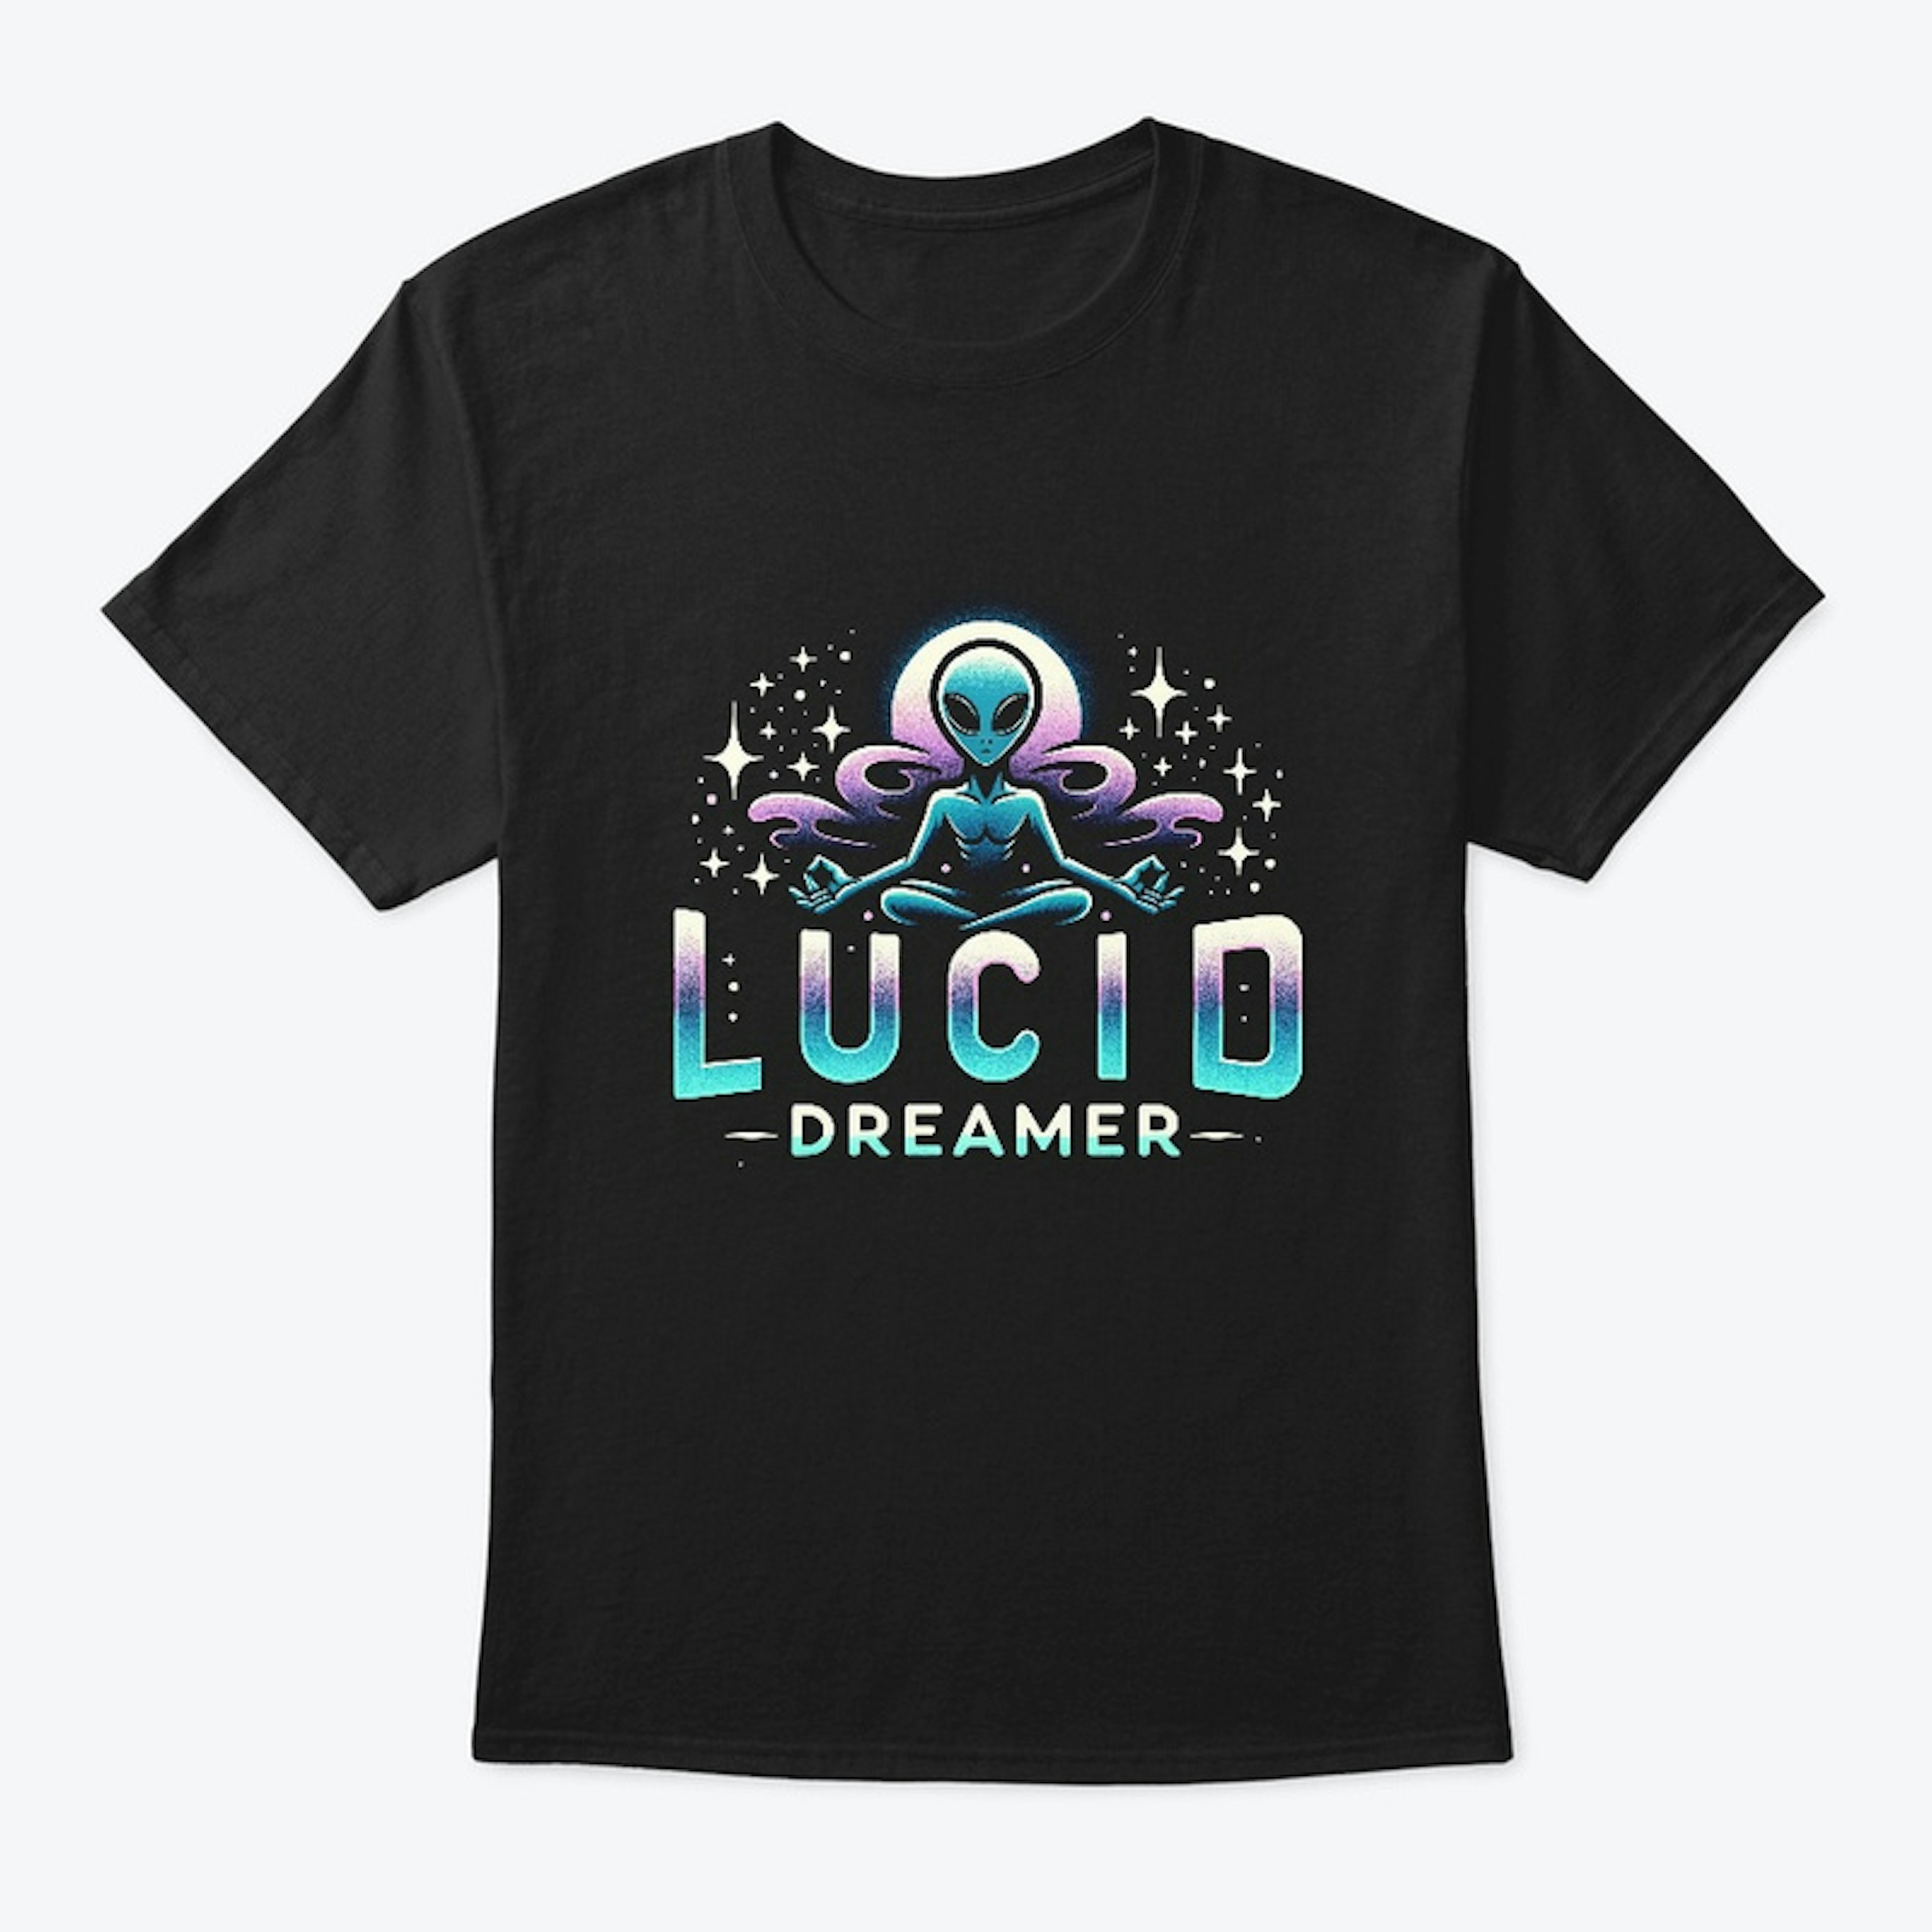 Galactic Lucid Dreamer Tee